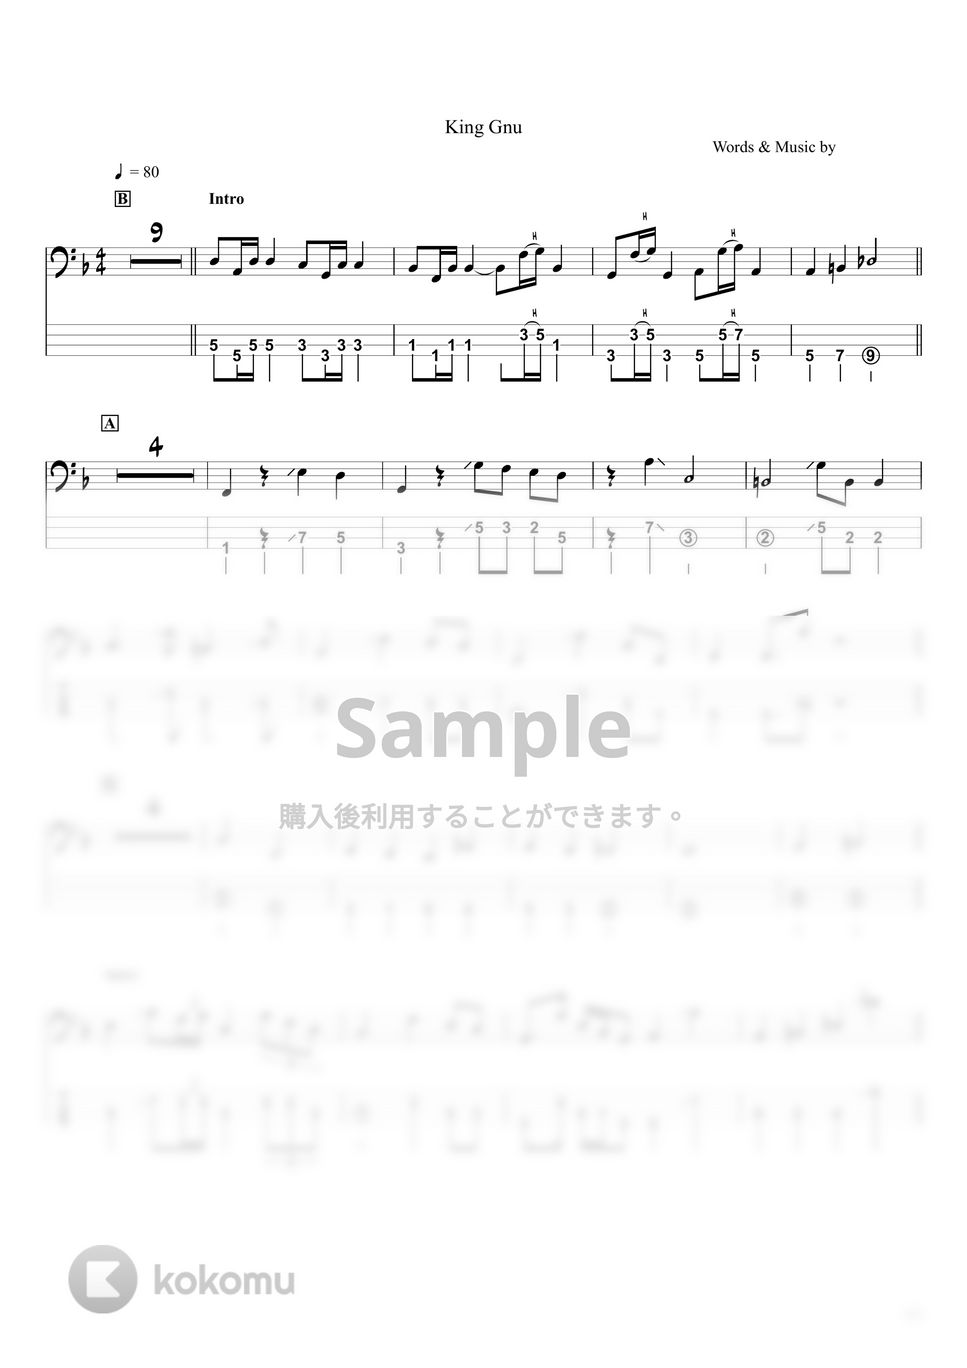 ing Gnu - カメレオン (ベースTAB譜☆4弦ベース対応) by swbass